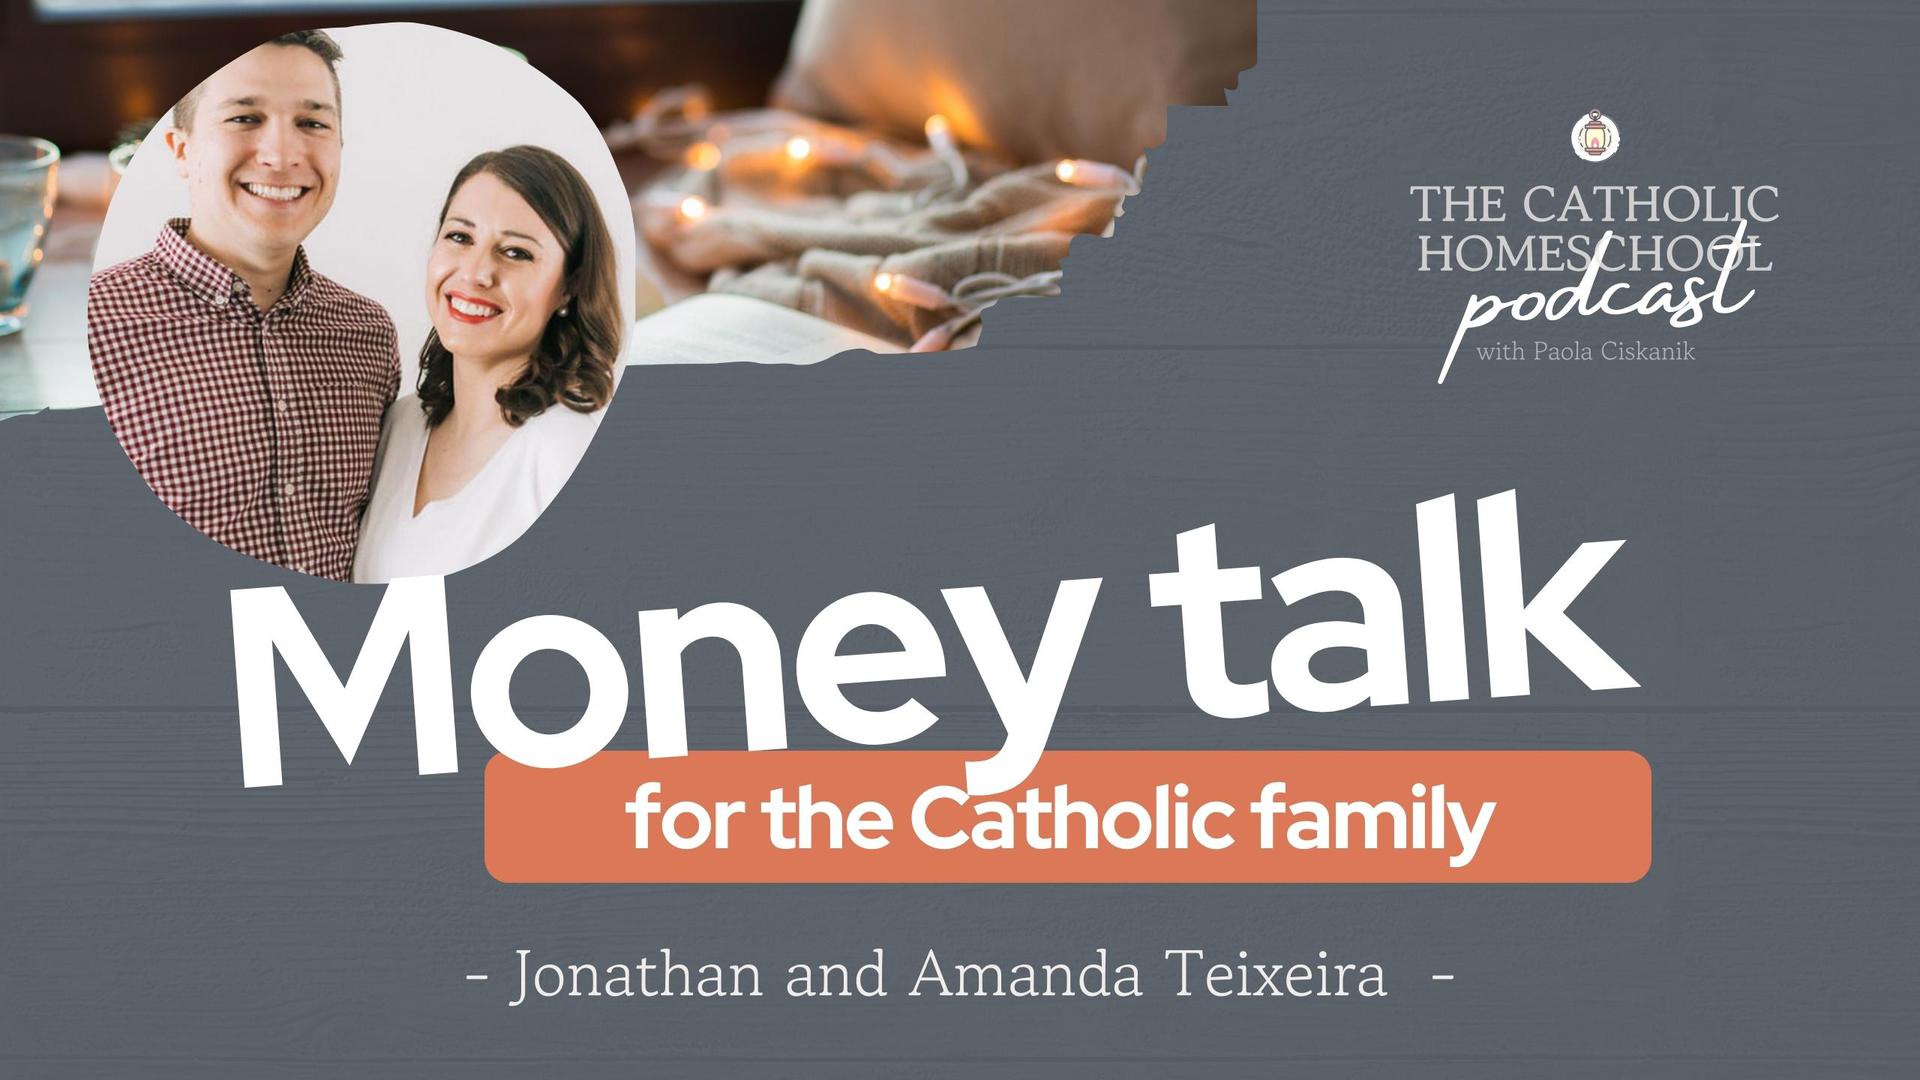 Jonathan and Amanda Teixeira | Money Talk for the Catholic Family | The Catholic Homeschool Podcast